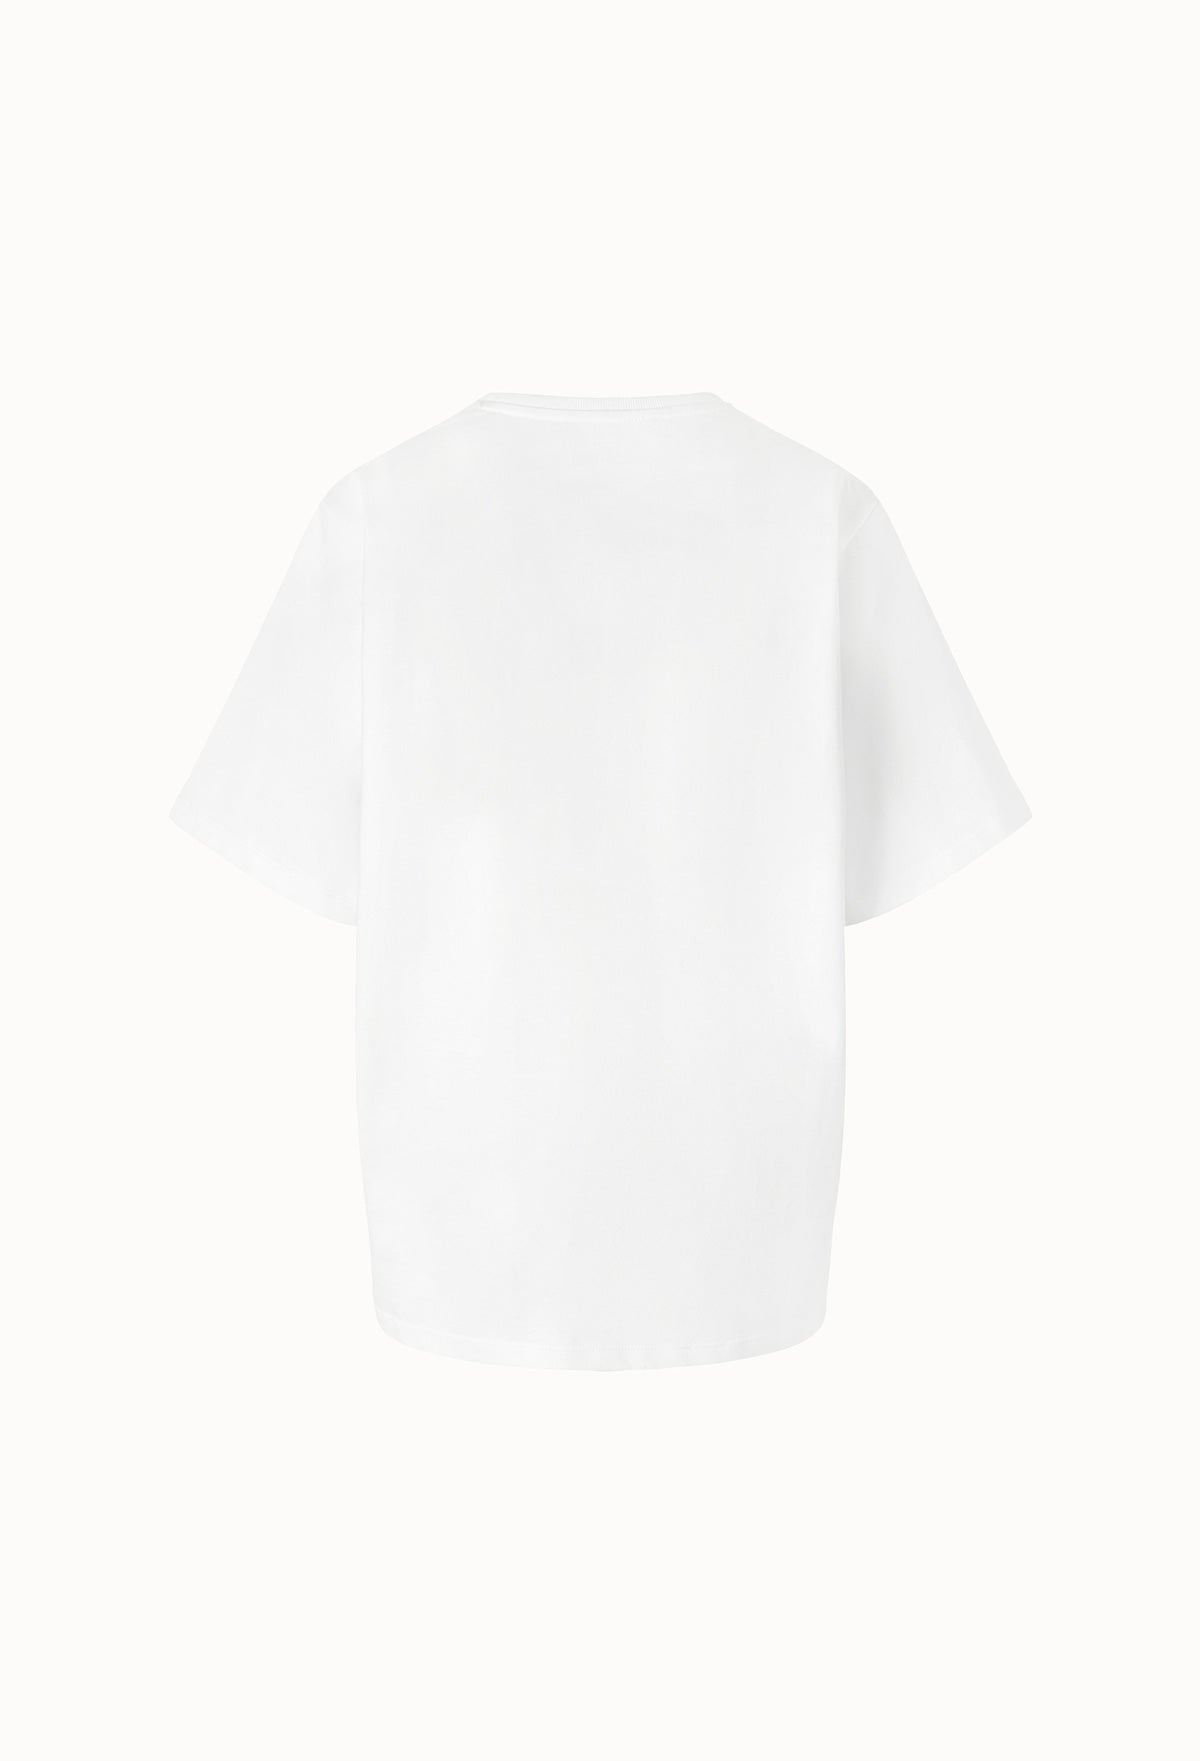 Original Heart T-shirt In White